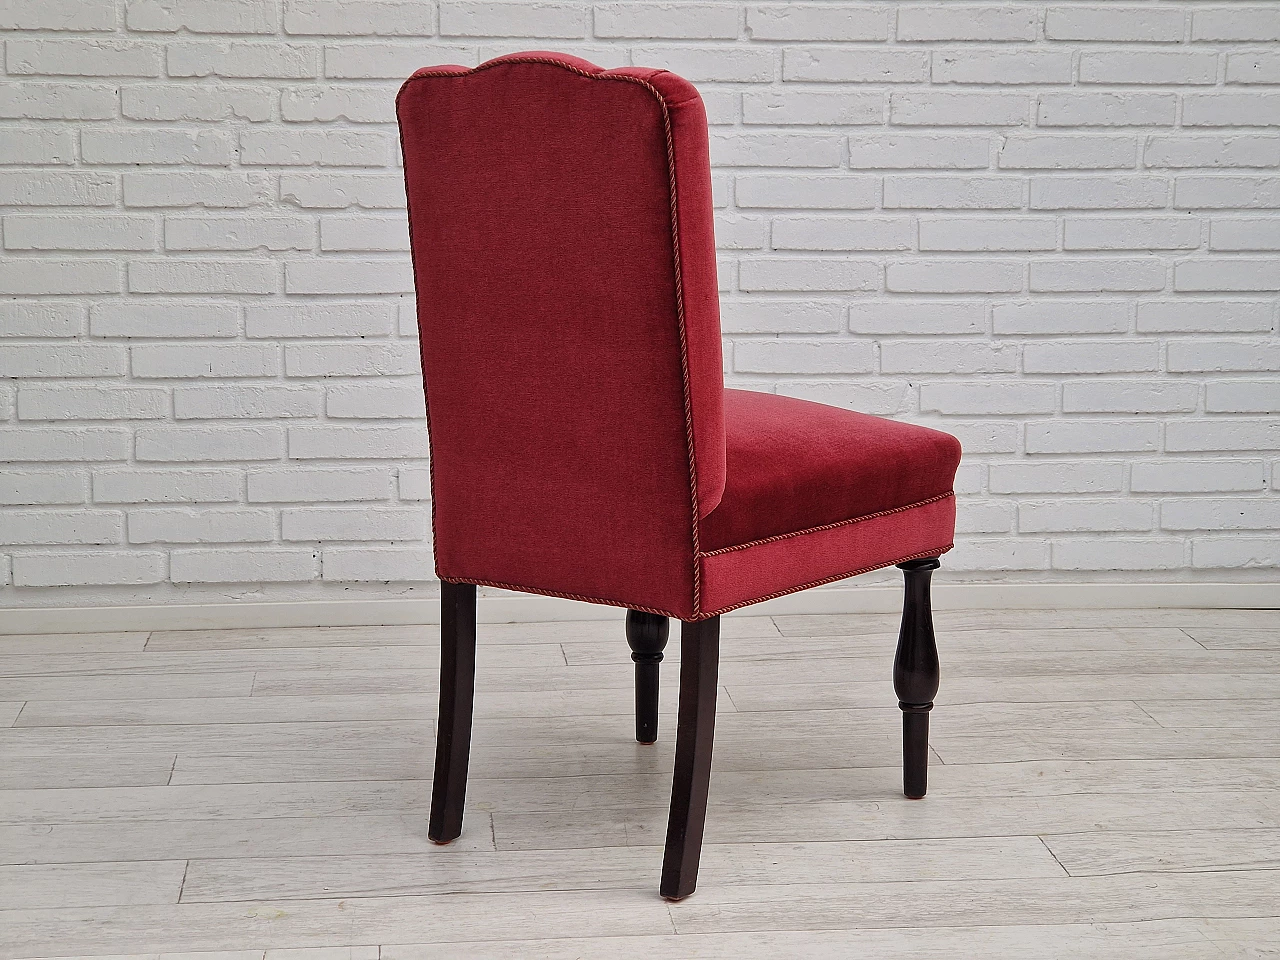 4 Danish oak chairs with cherry red velvet upholstery, 1950s 21